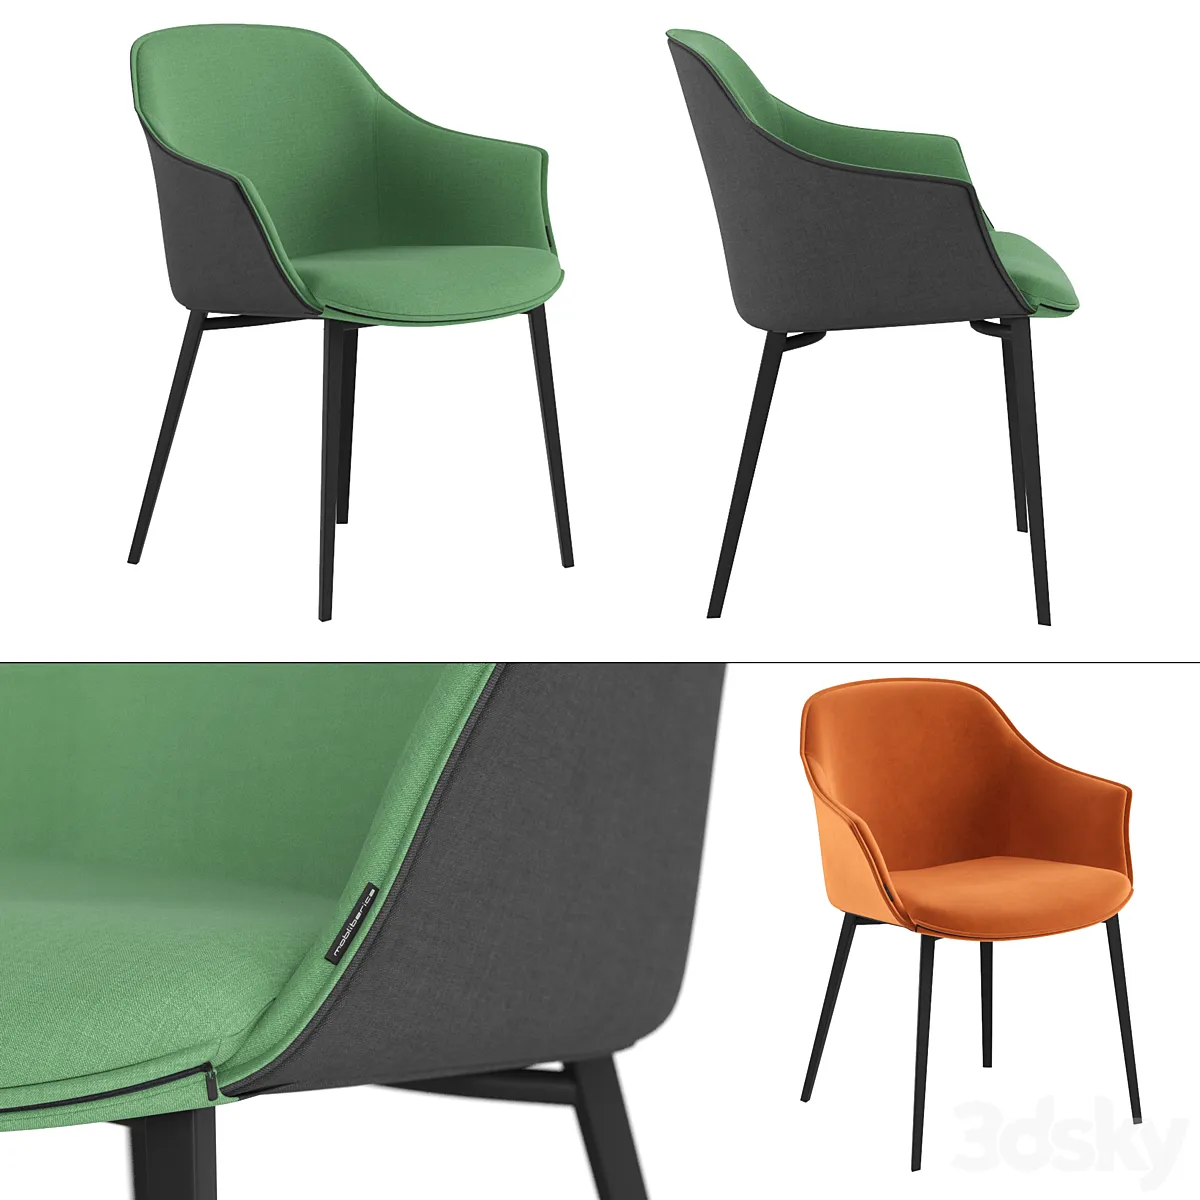 3dsky - Chair Kedua metal legs by Mobliberica